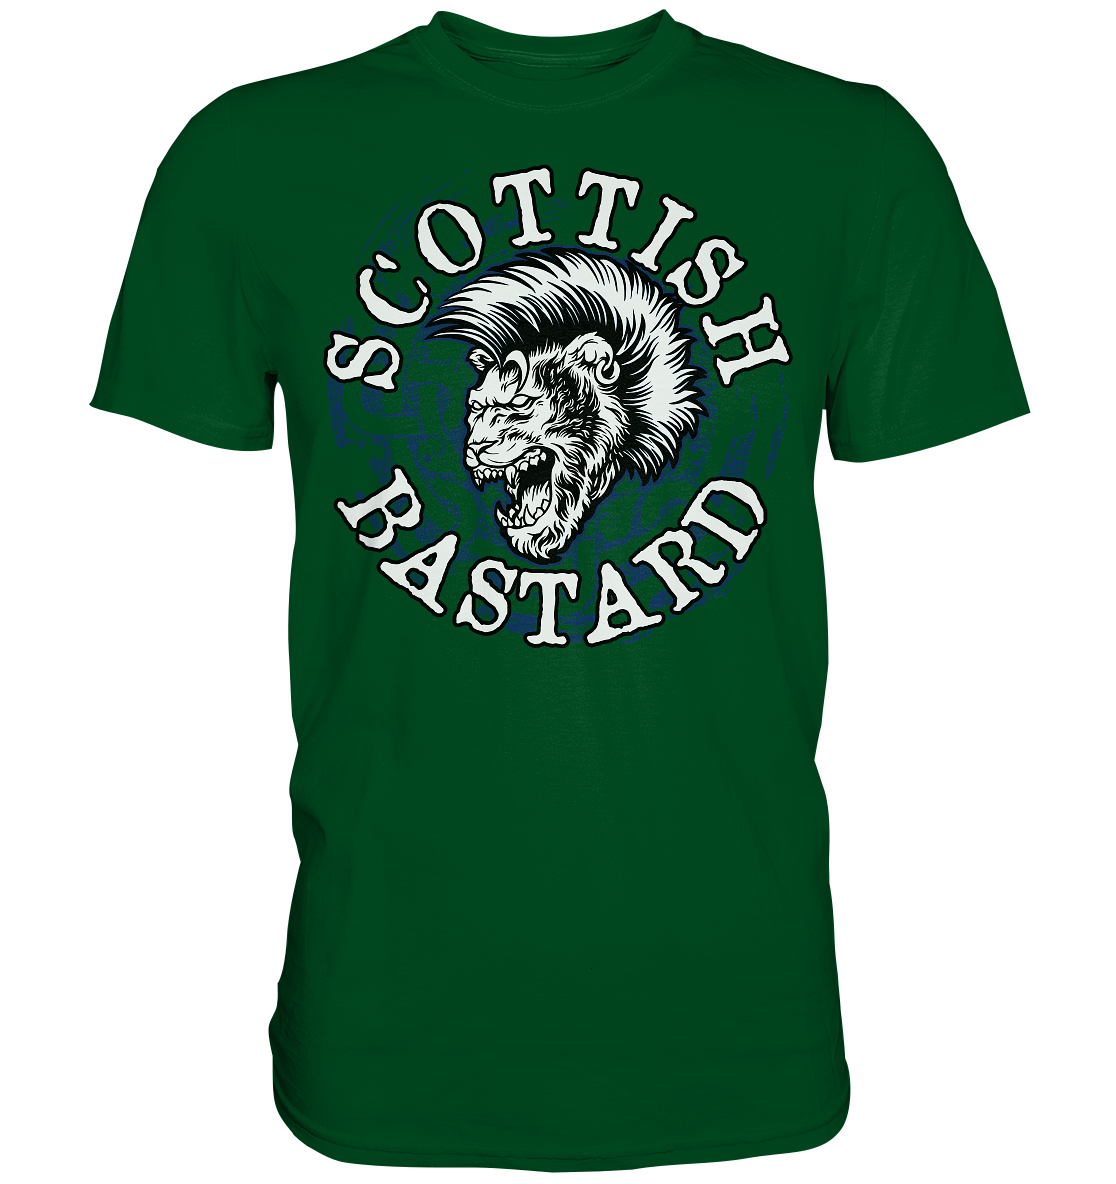 "Scottish Bastard" - Premium Shirt